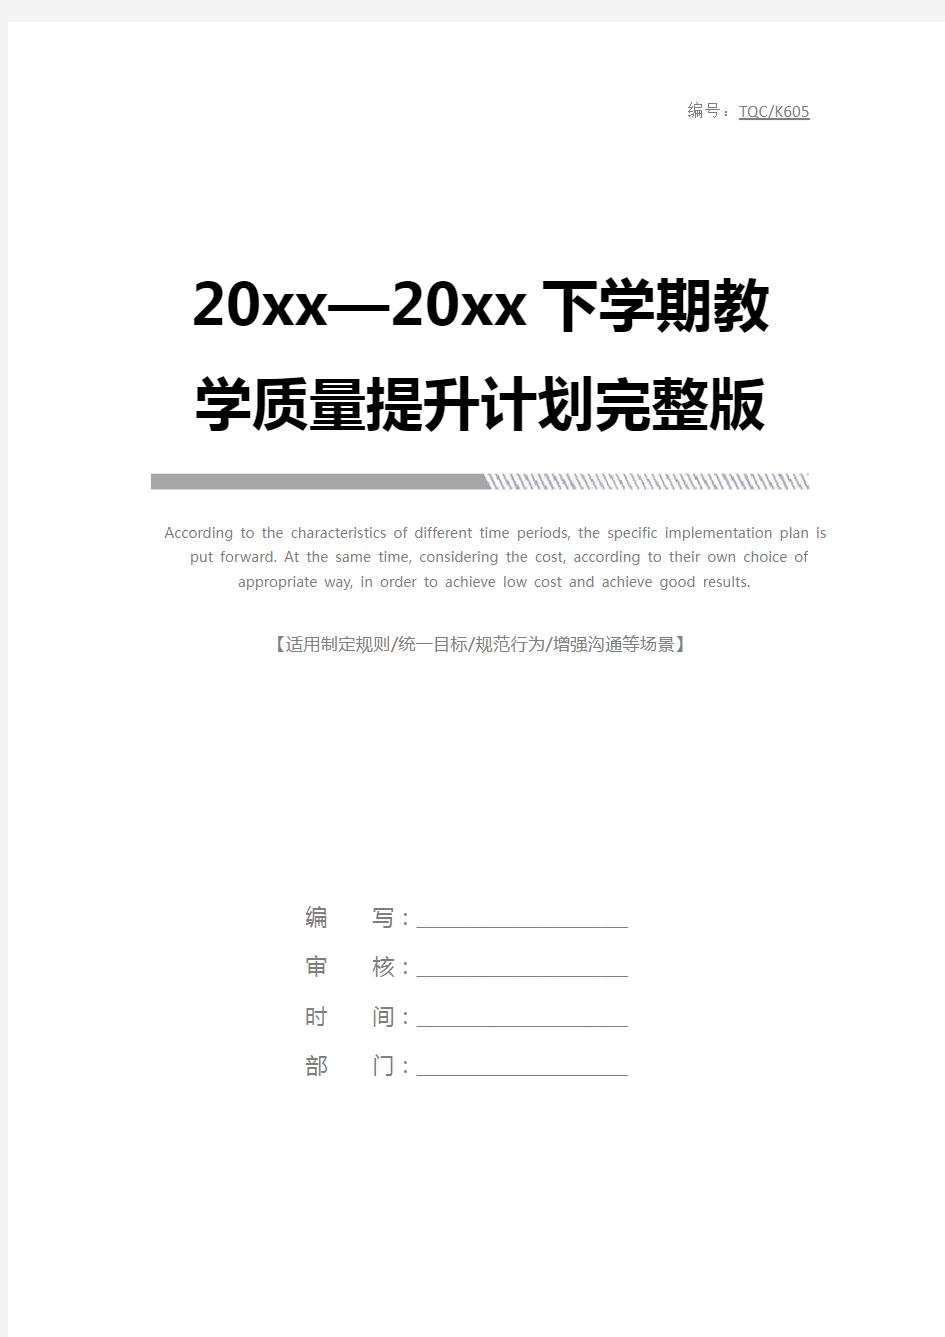 20xx—20xx下学期教学质量提升计划完整版